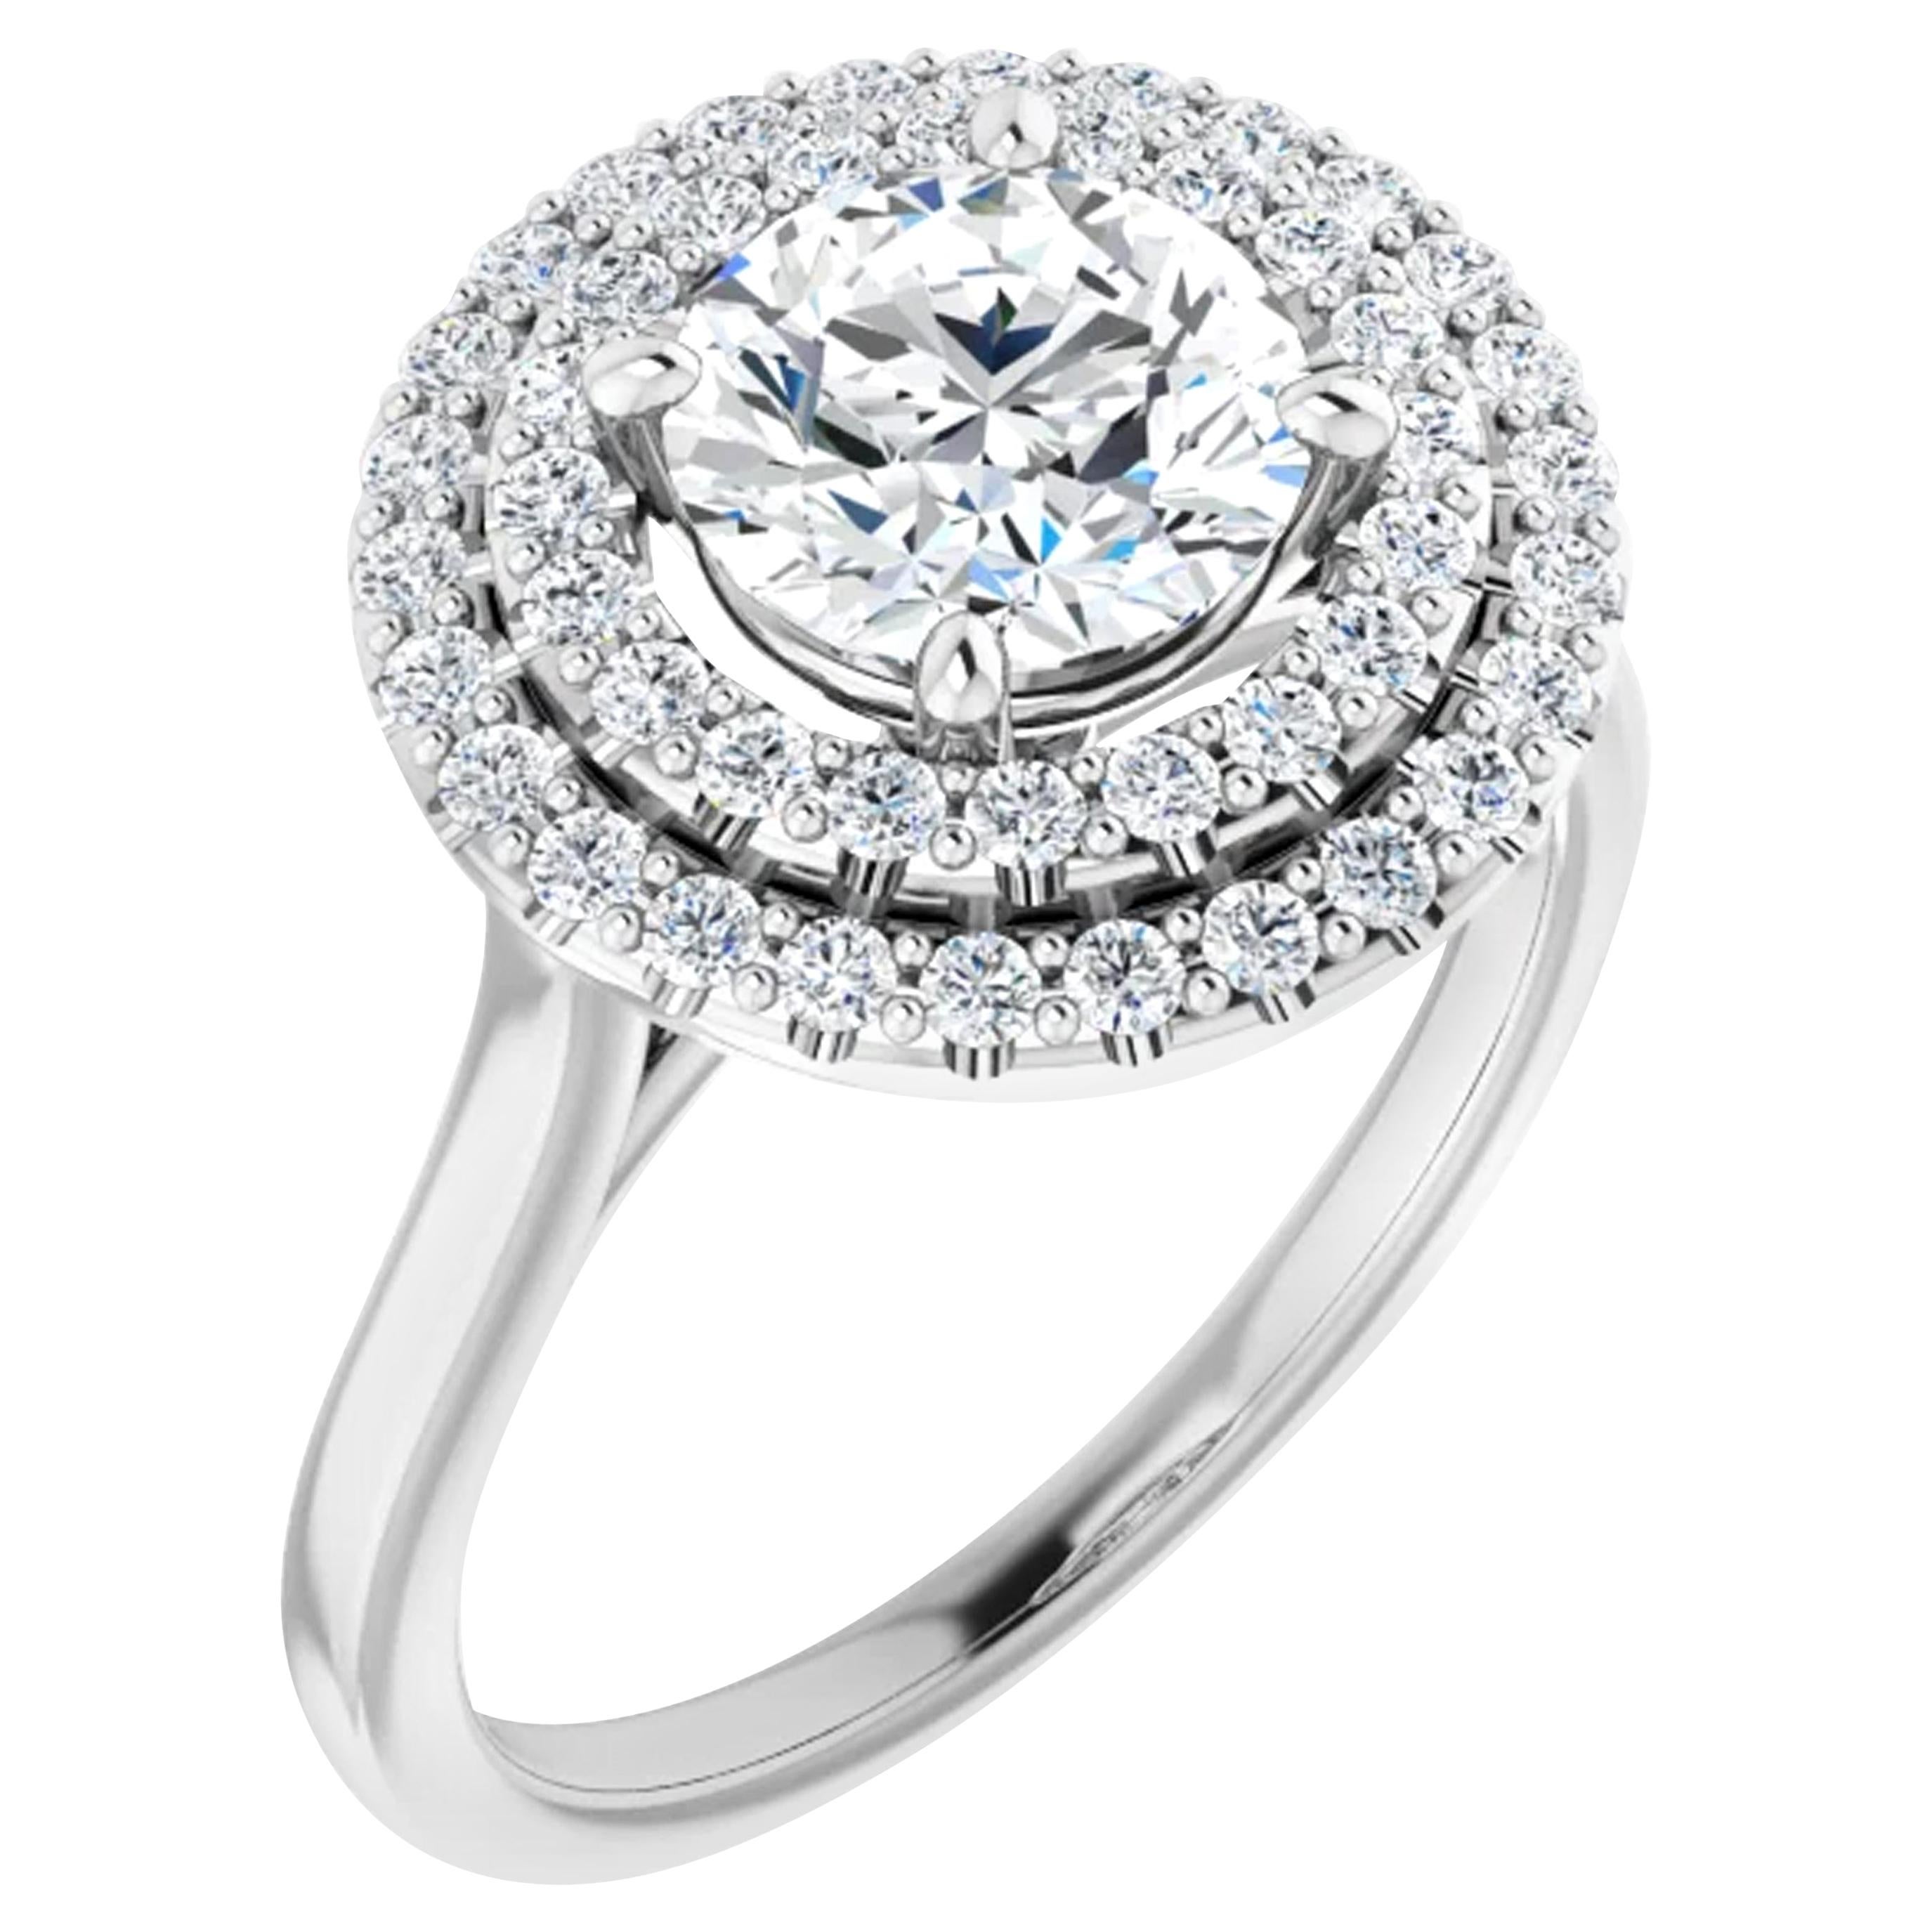 Double Halo GIA Round Brilliant White Diamond Engagement Ring 1.35 Carat For Sale